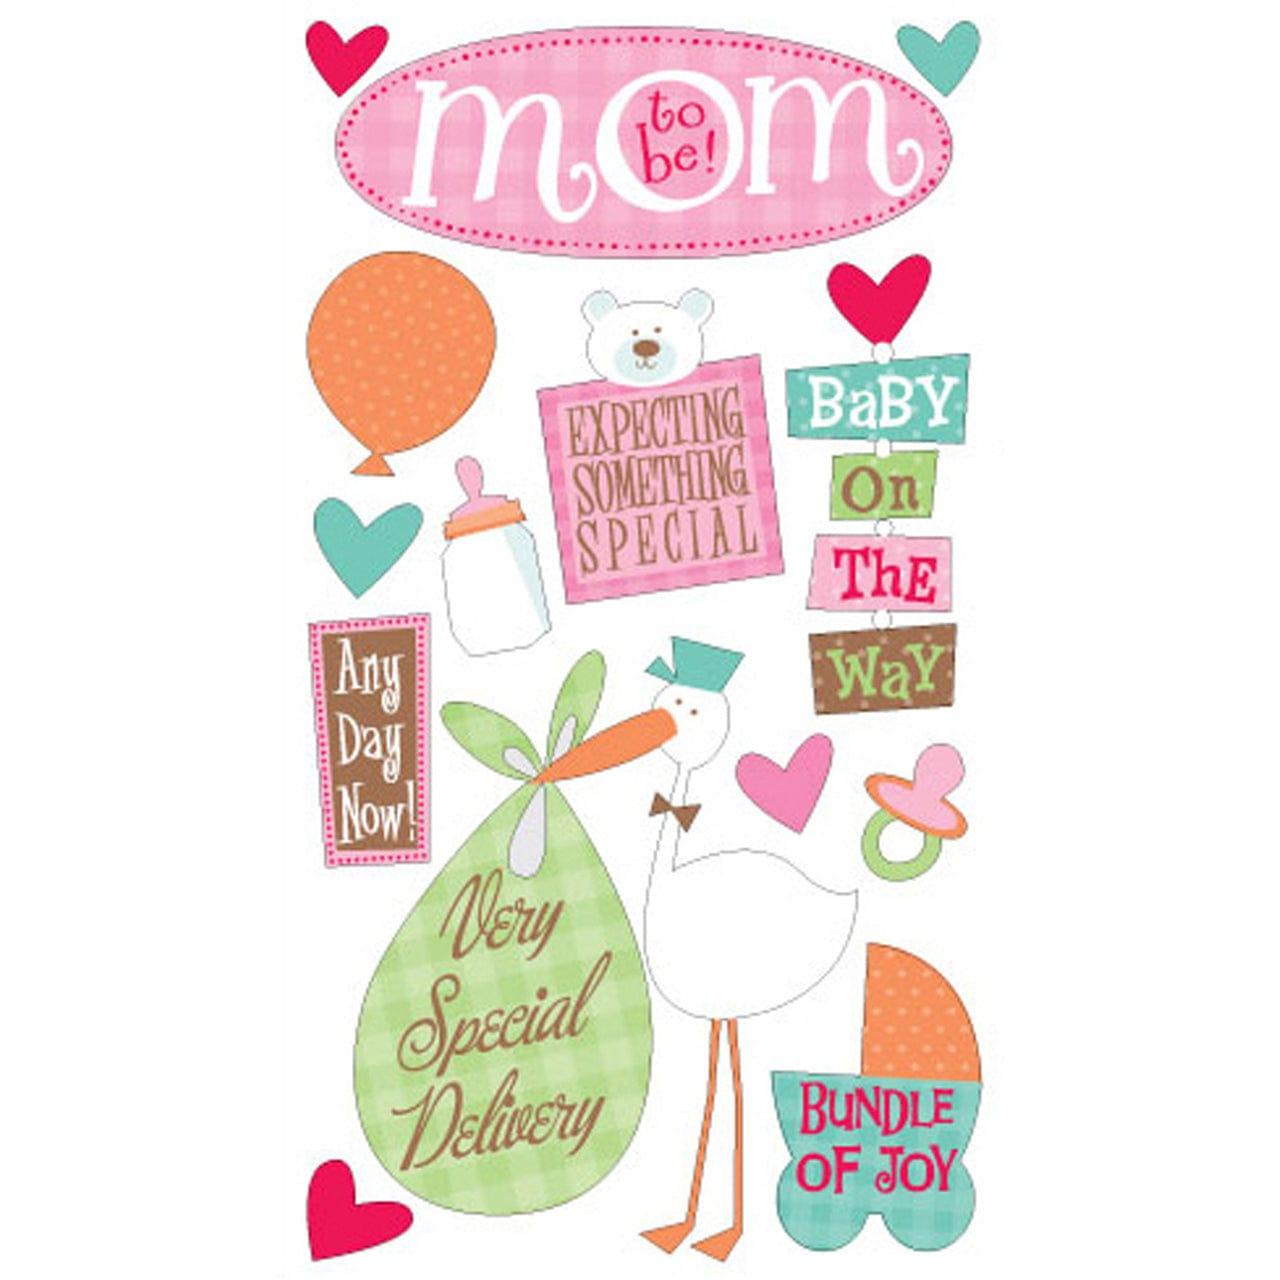 Mom To Be 4 x 7 Glittered Scrapbook Sticker Sheet by Sticko - Scrapbook Supply Companies